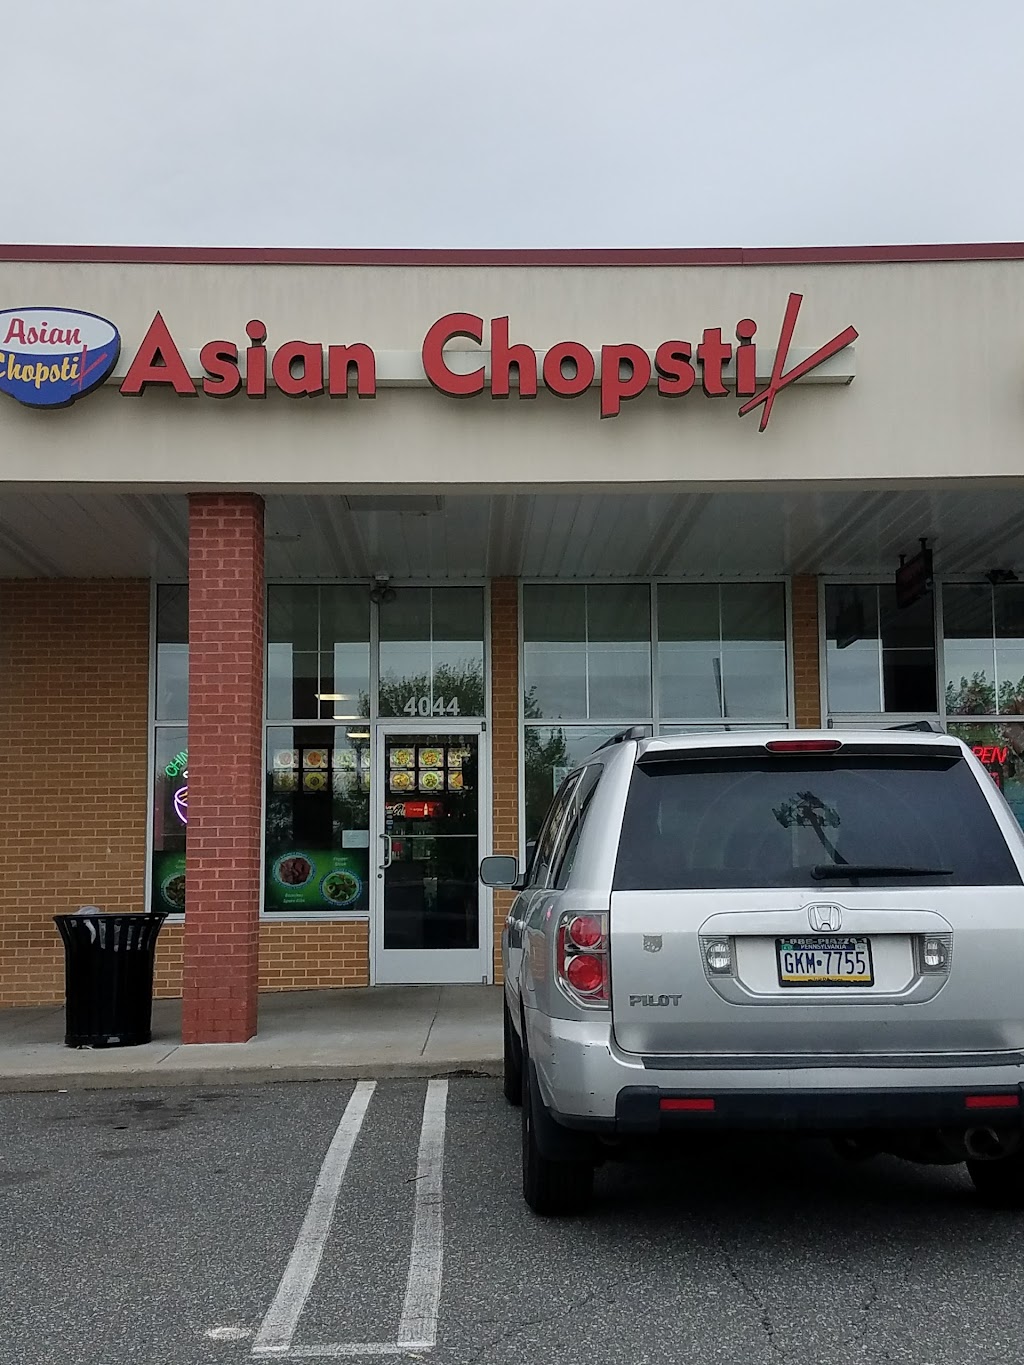 Asian Chopsticks | 4044 Woodhaven Rd, Philadelphia, PA 19154 | Phone: (215) 824-1028